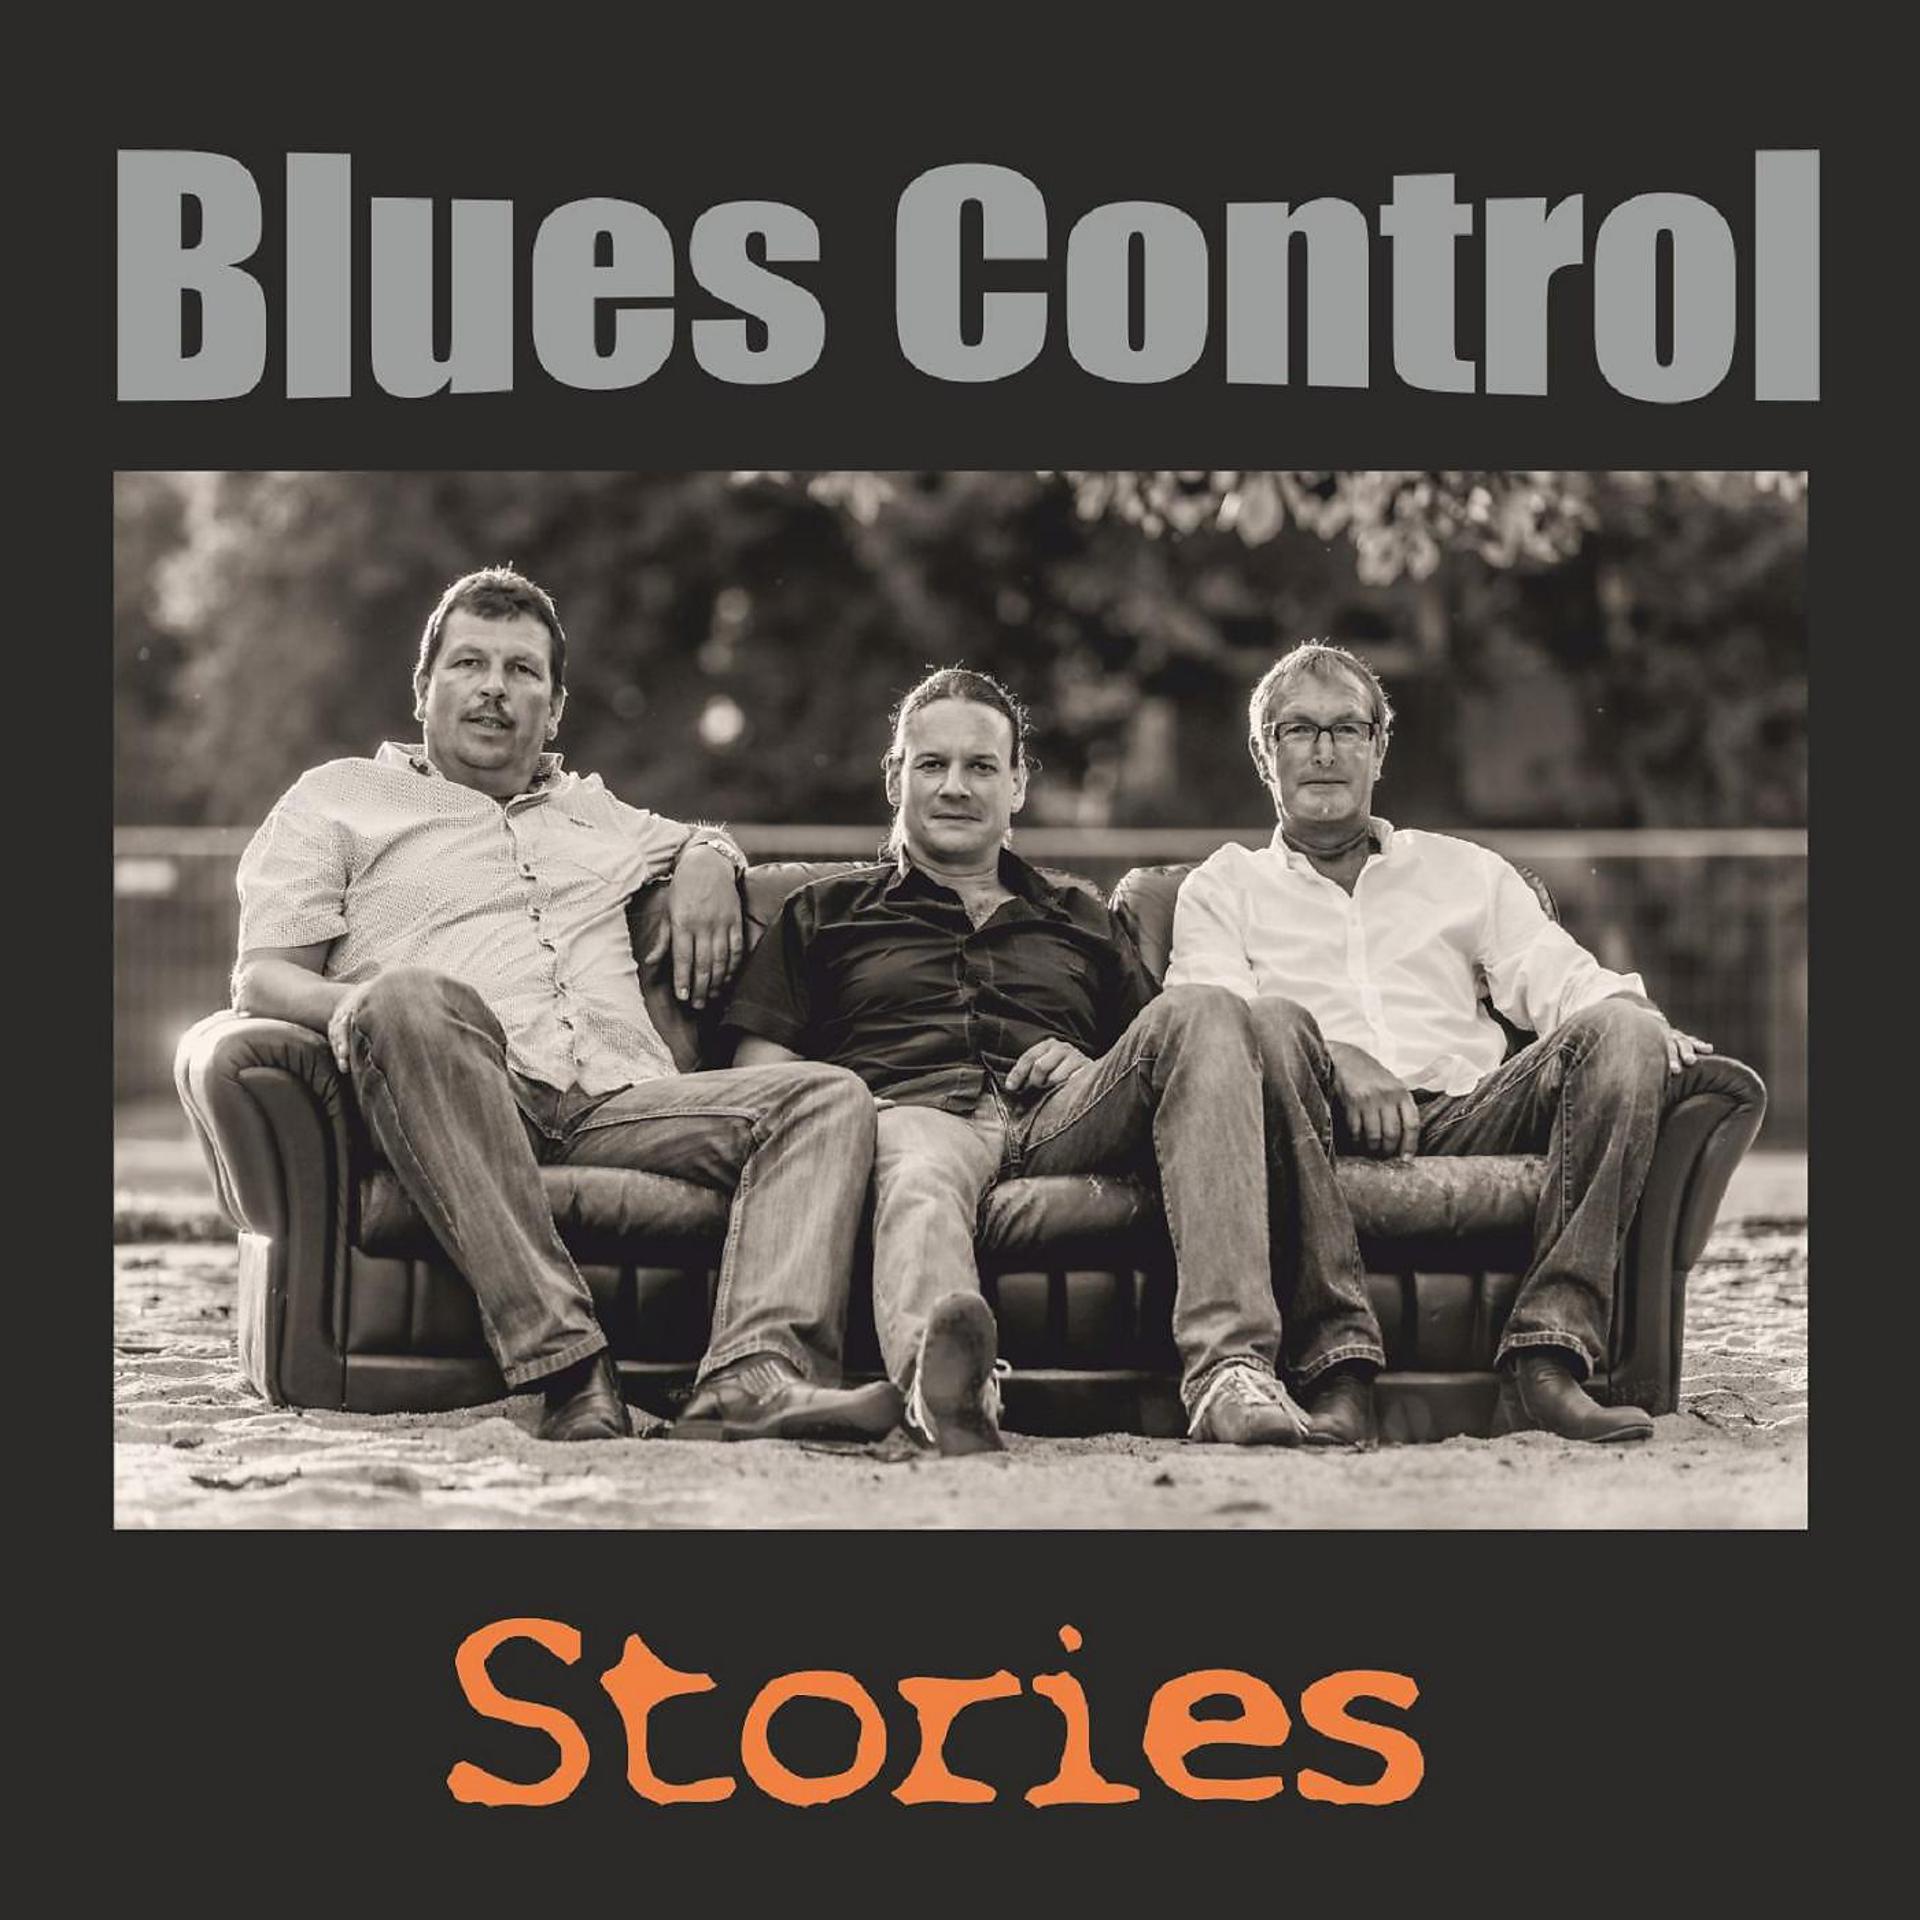 Jay Willie Blues Band. Larry Garner. The Black Keys Dropout Boogie. Blue control